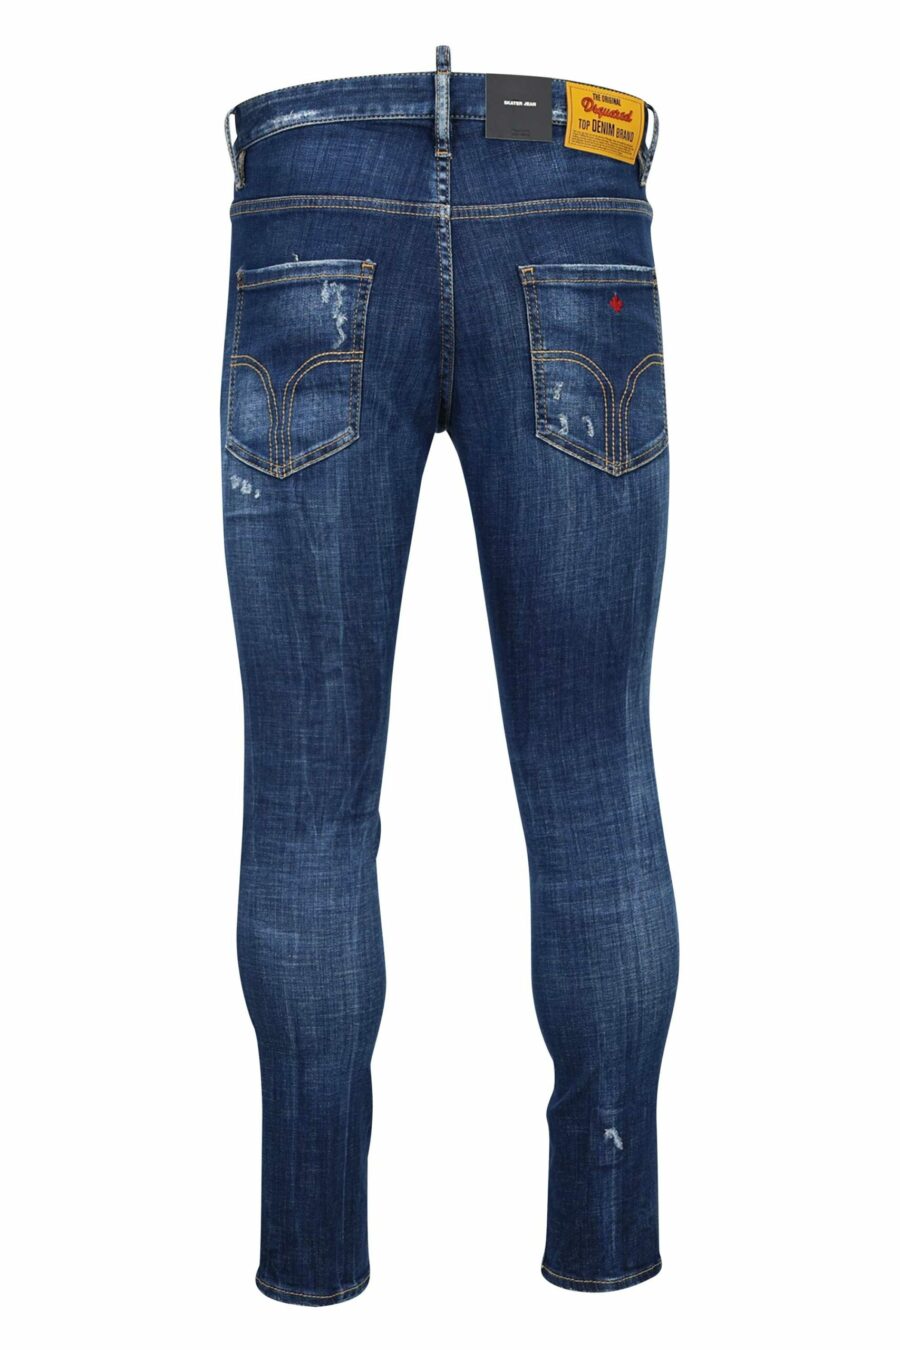 Semi-worn blue "skater jean" jeans - 8054148101503 2 scaled